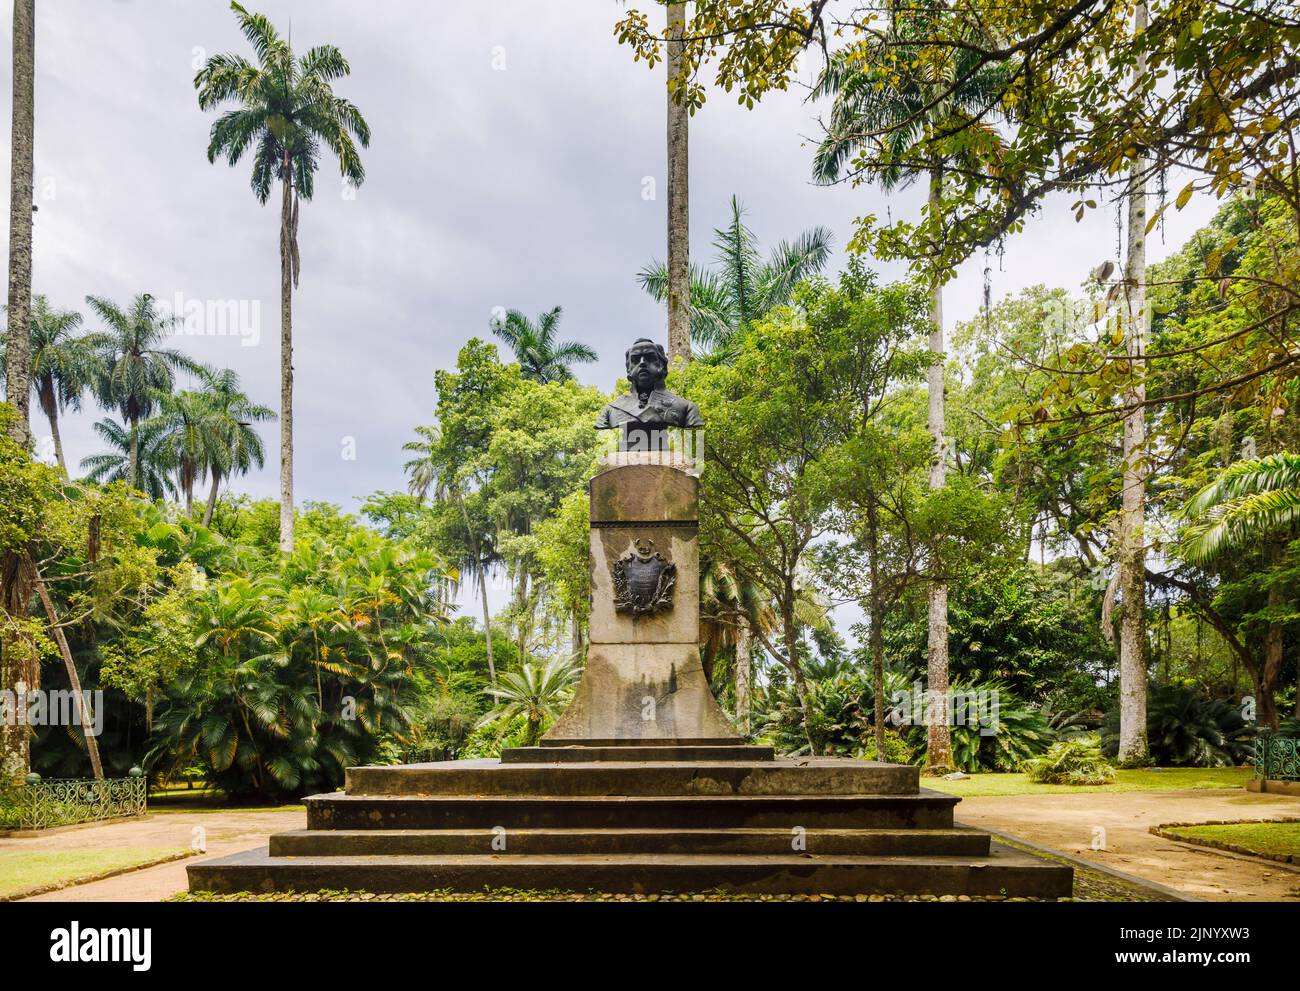 Bust and coat of arms of D Joao VI, founder of the Botanical Garden (Jardim Botanico), South Zone, Rio de Janeiro, Brazil Stock Photo